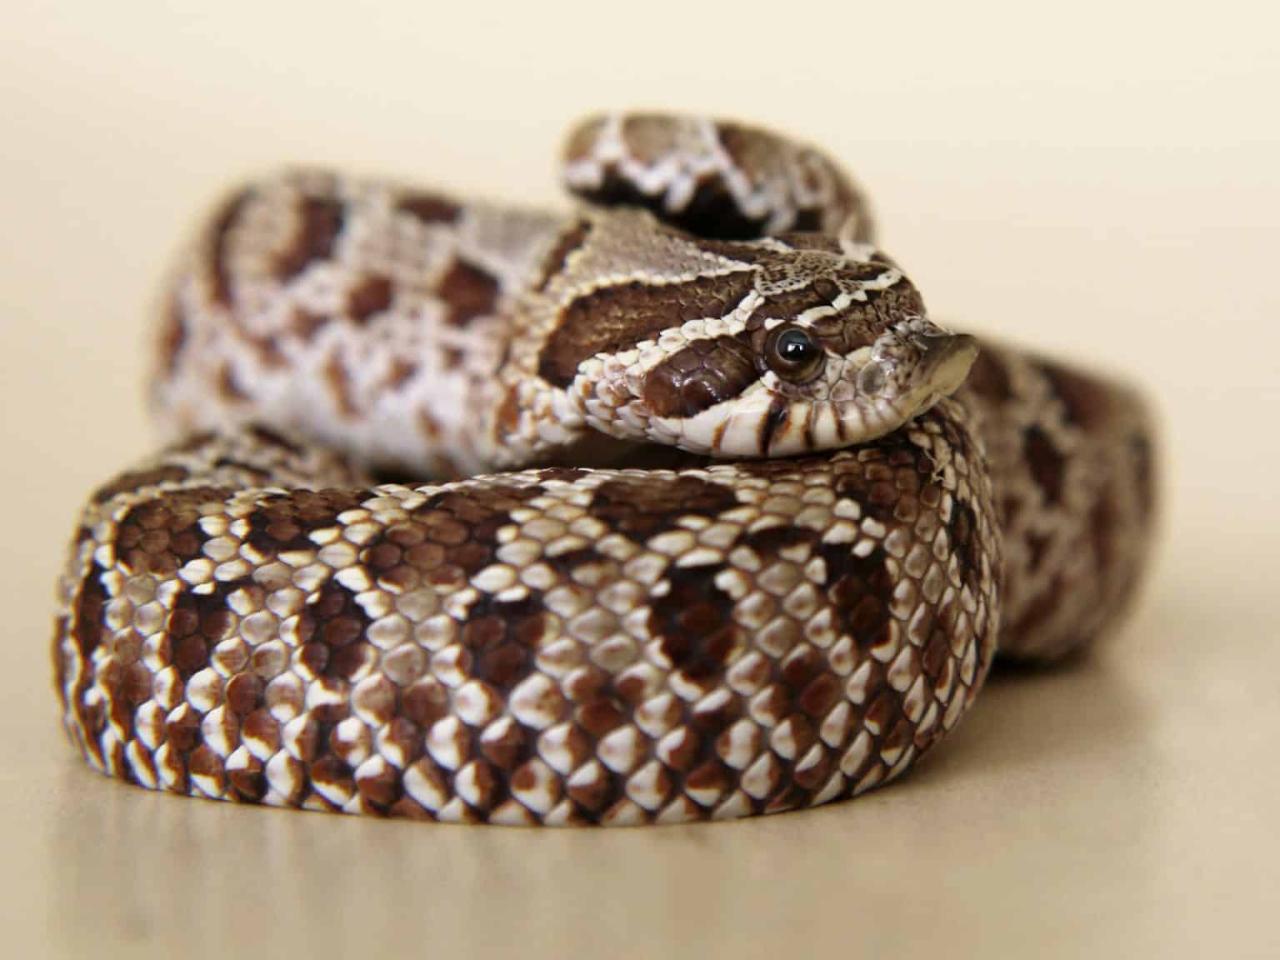 Copperhead snake carolina north rat vs venomous live found contortrix agkistrodon characteristics myths debunking yard should let why large wunc